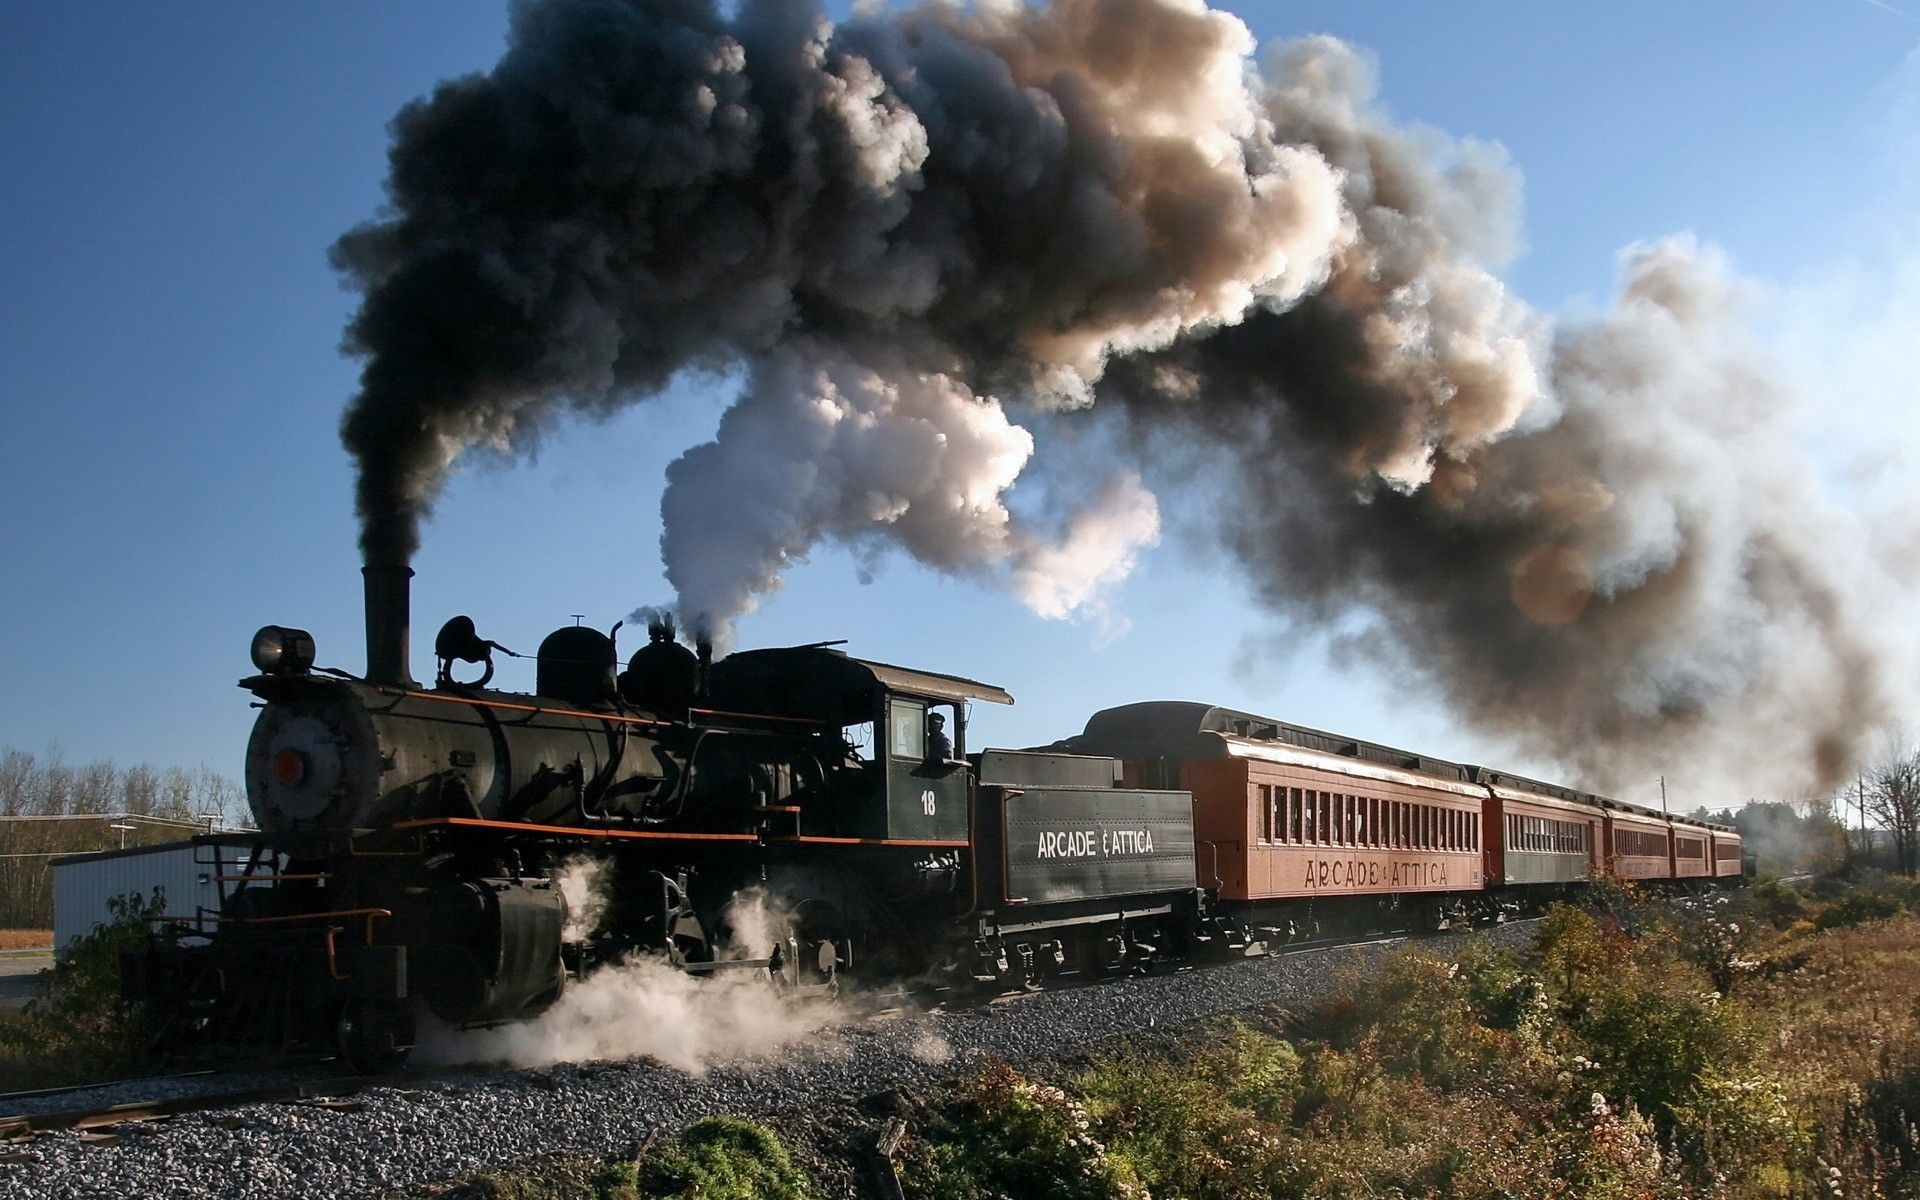 railway, Train, Vehicle, Steam locomotive, Smoke, Trees, Plants, New York state, USA, Men, Rail yard Wallpaper